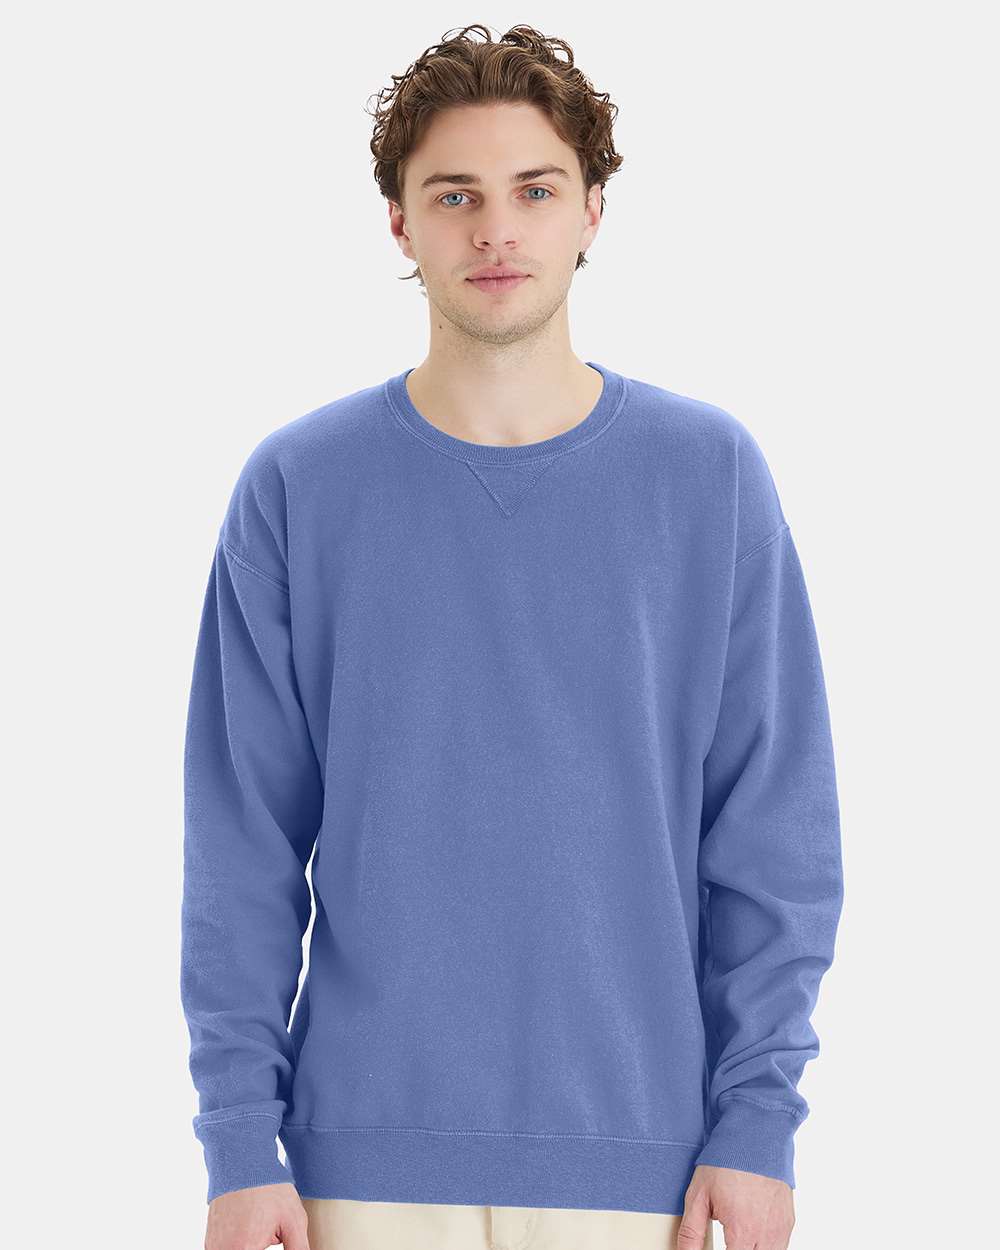 ComfortWash By Hanes Garment Dyed Unisex Crewneck Sweatshirt